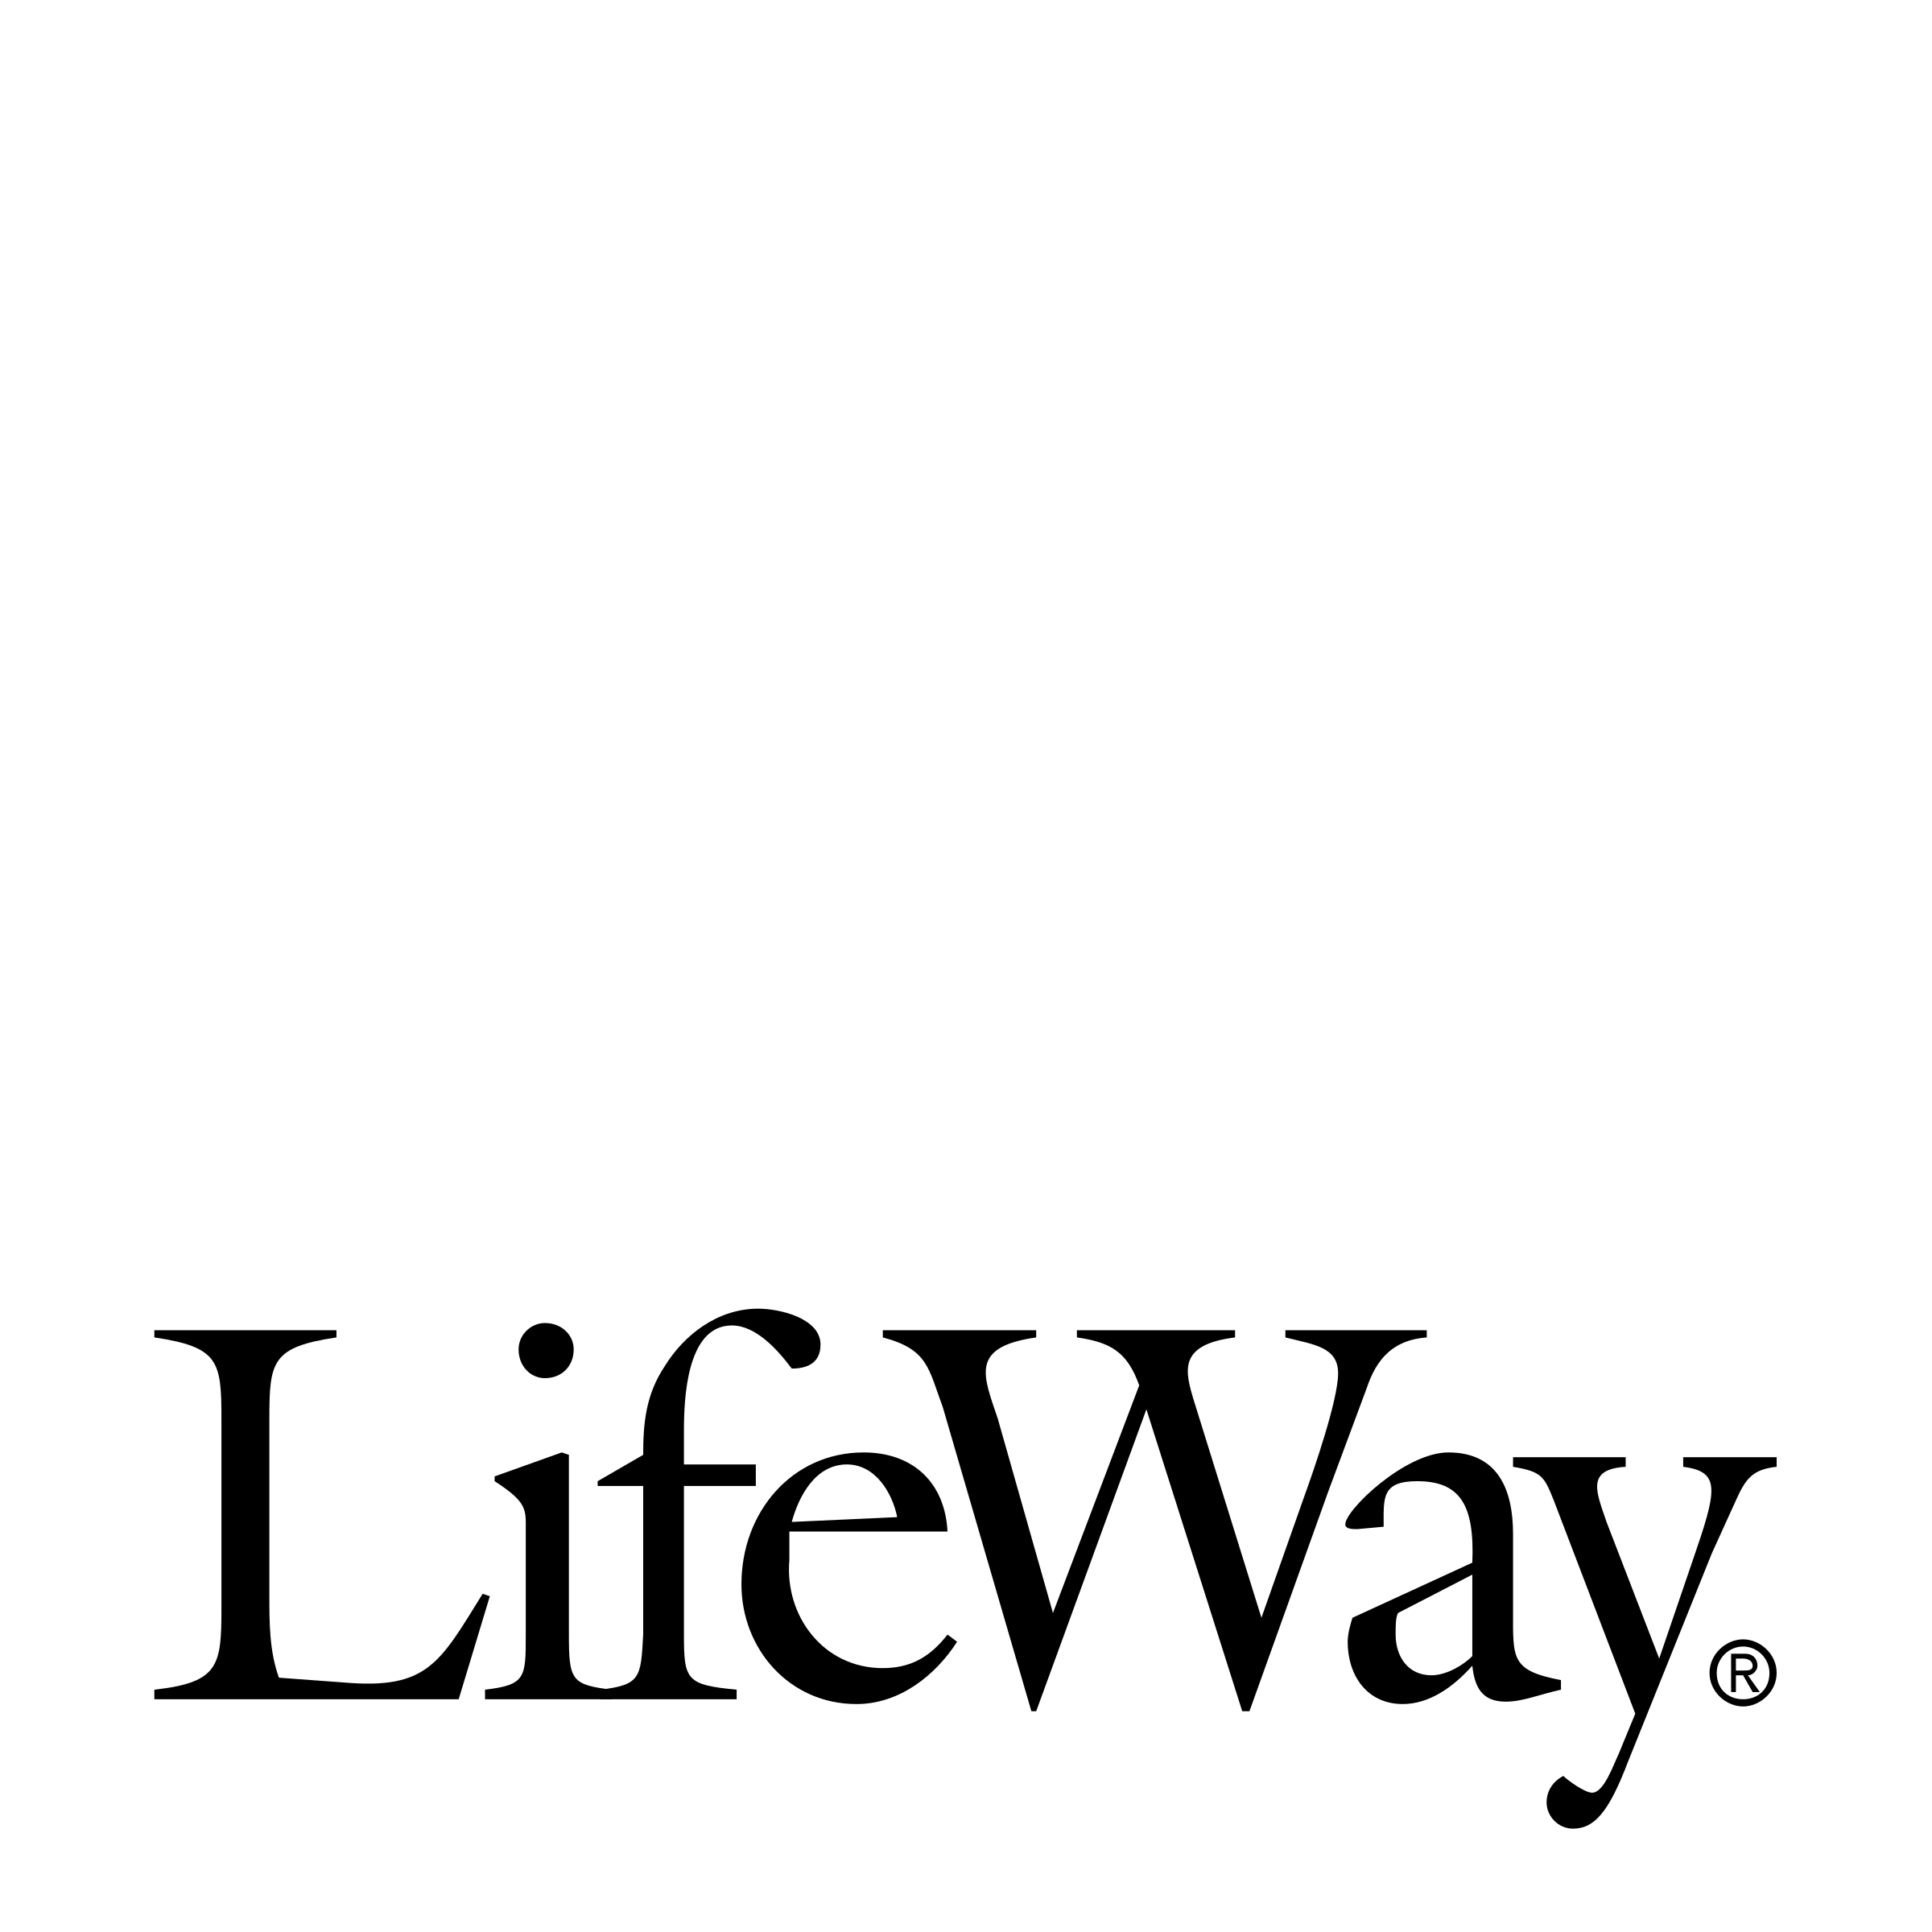 LifeWay Logo - LifeWay Logo PNG Transparent & SVG Vector - Freebie Supply